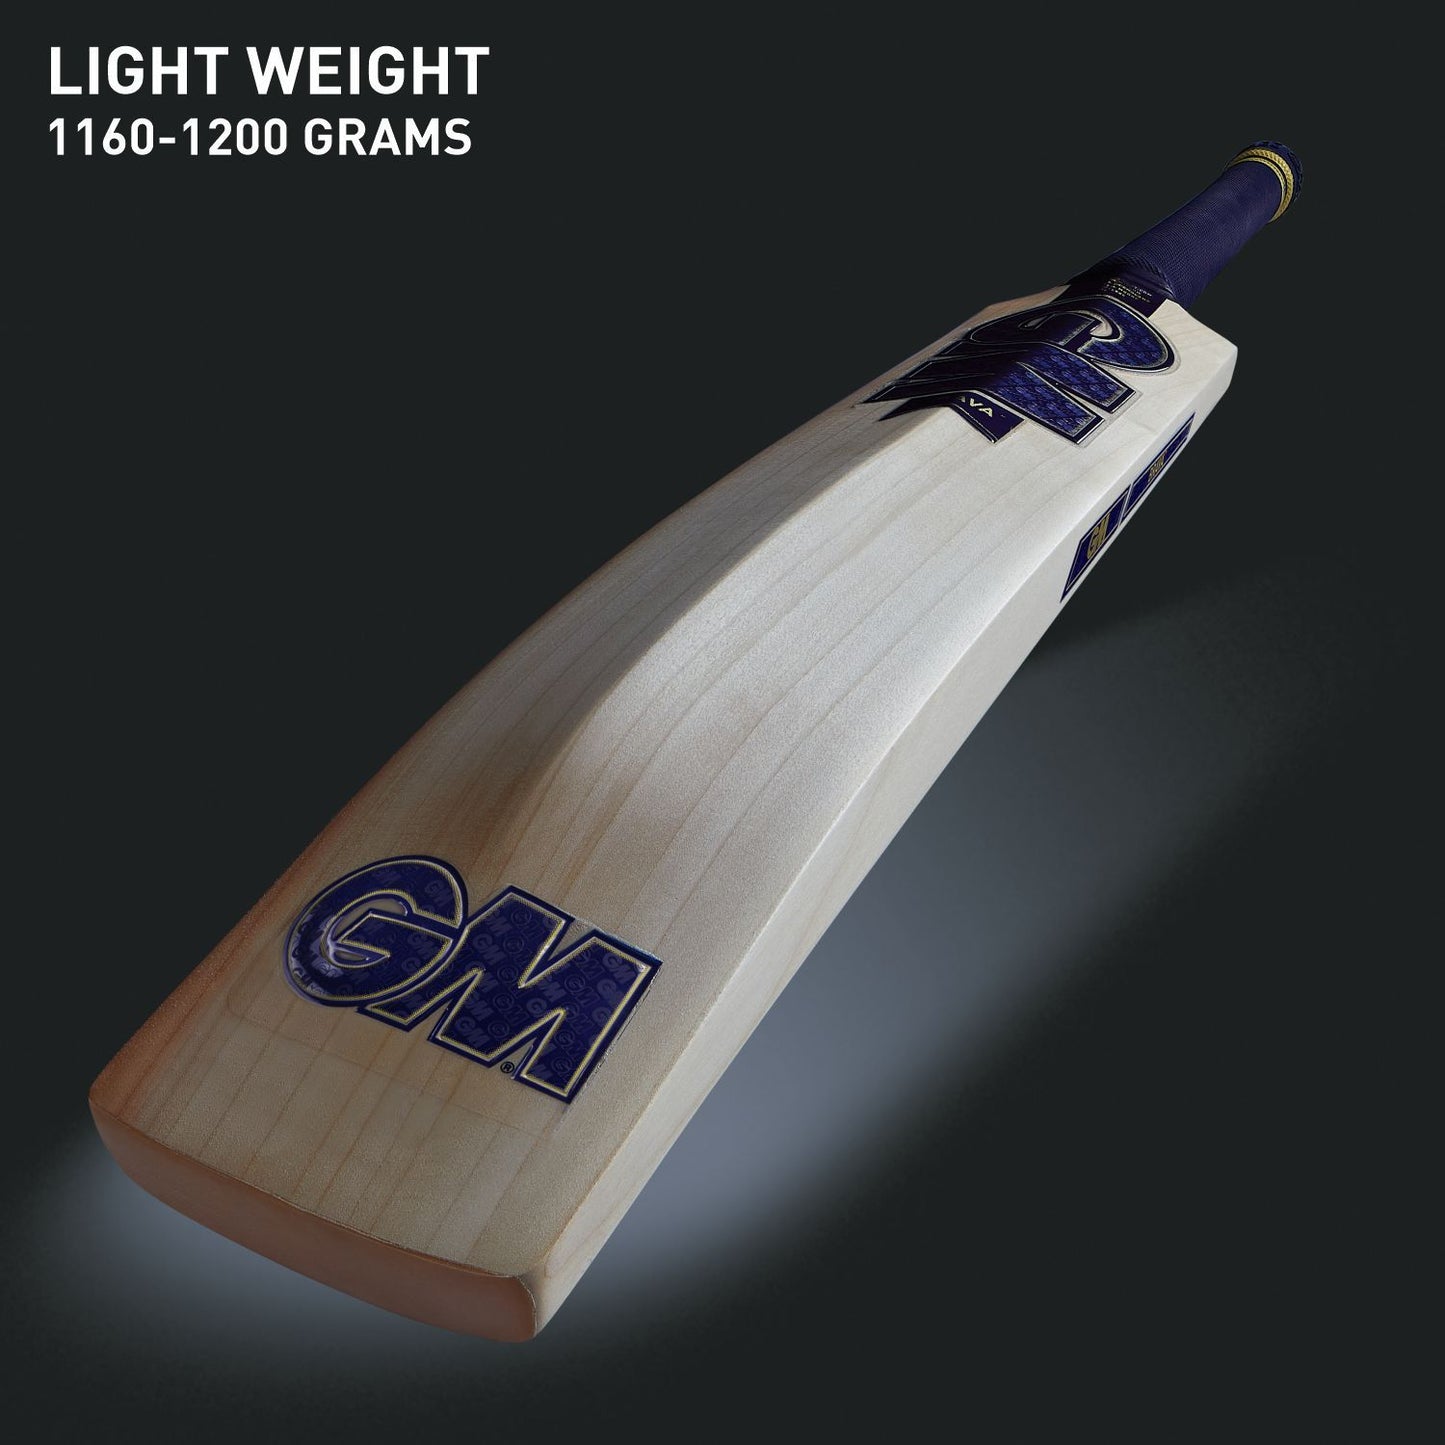 GM Brava 707 English Willow Cricket Bat - Best Price online Prokicksports.com